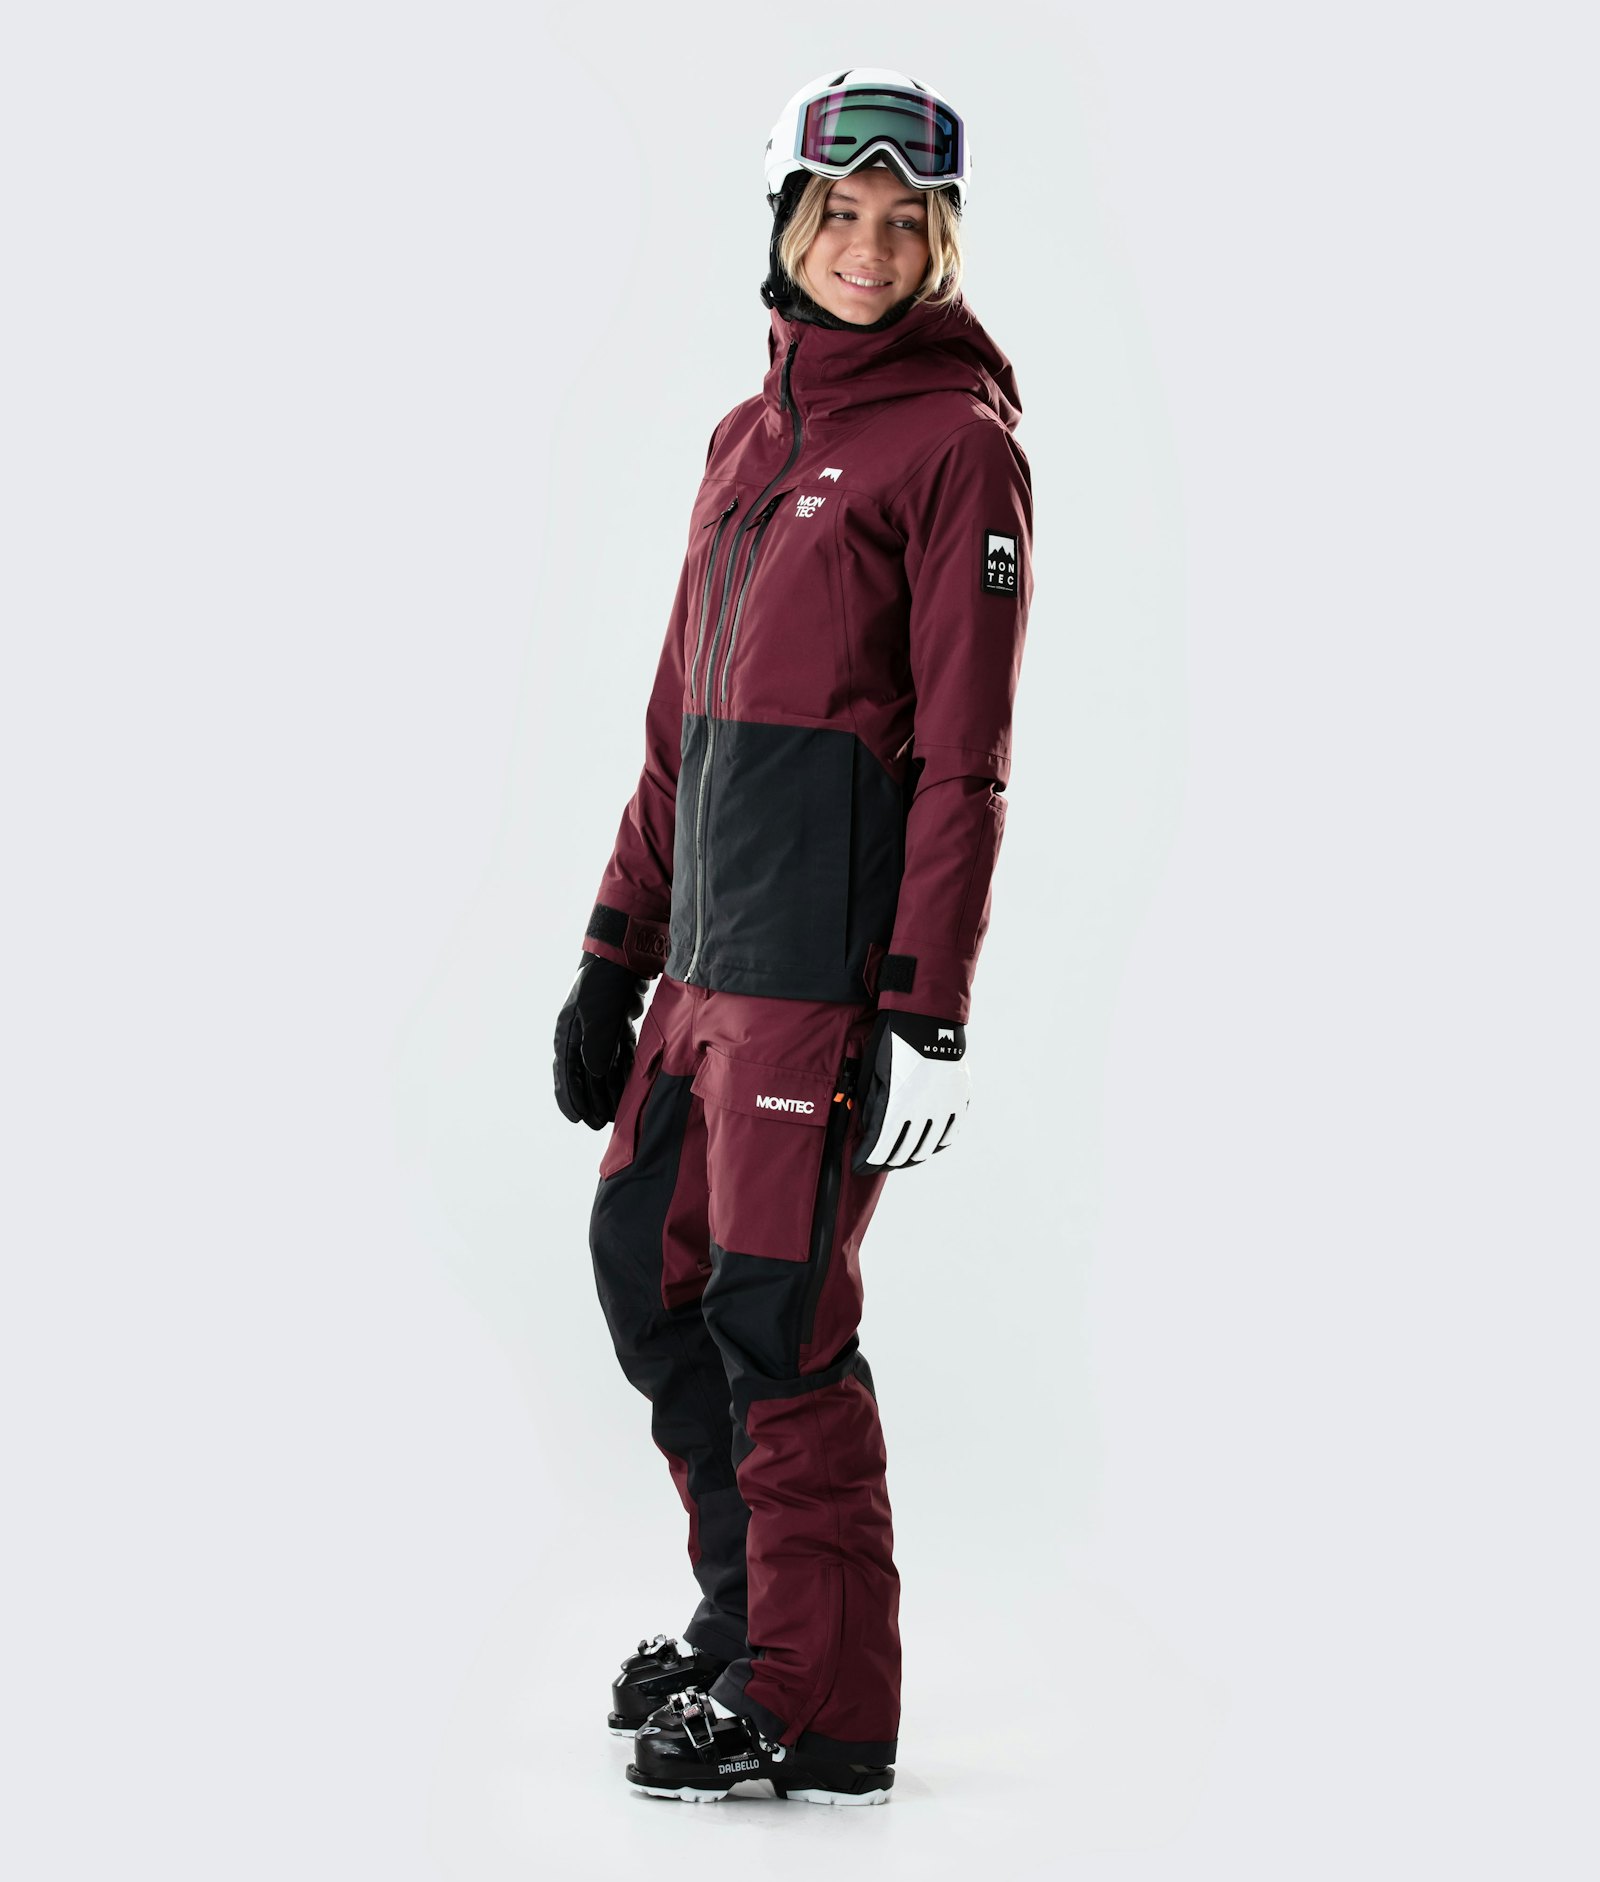 Moss W 2020 スキージャケット レディース Burgundy/Black